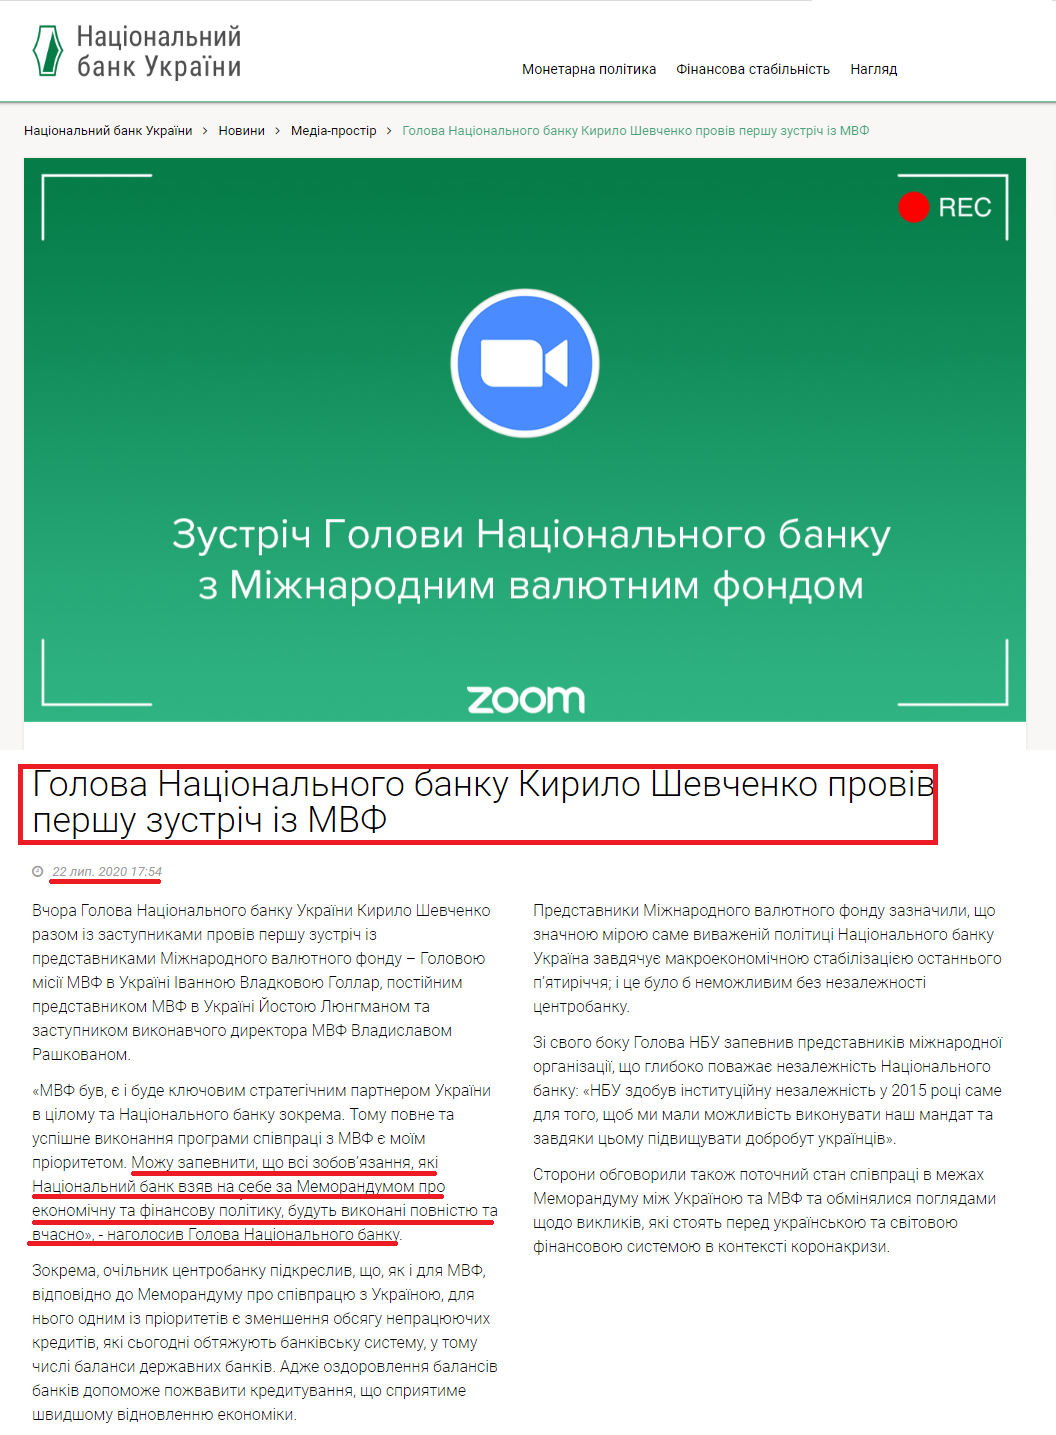 https://bank.gov.ua/ua/news/all/golova-natsionalnogo-banku-kirilo-shevchenko-proviv-pershu-zustrich-iz-mvf